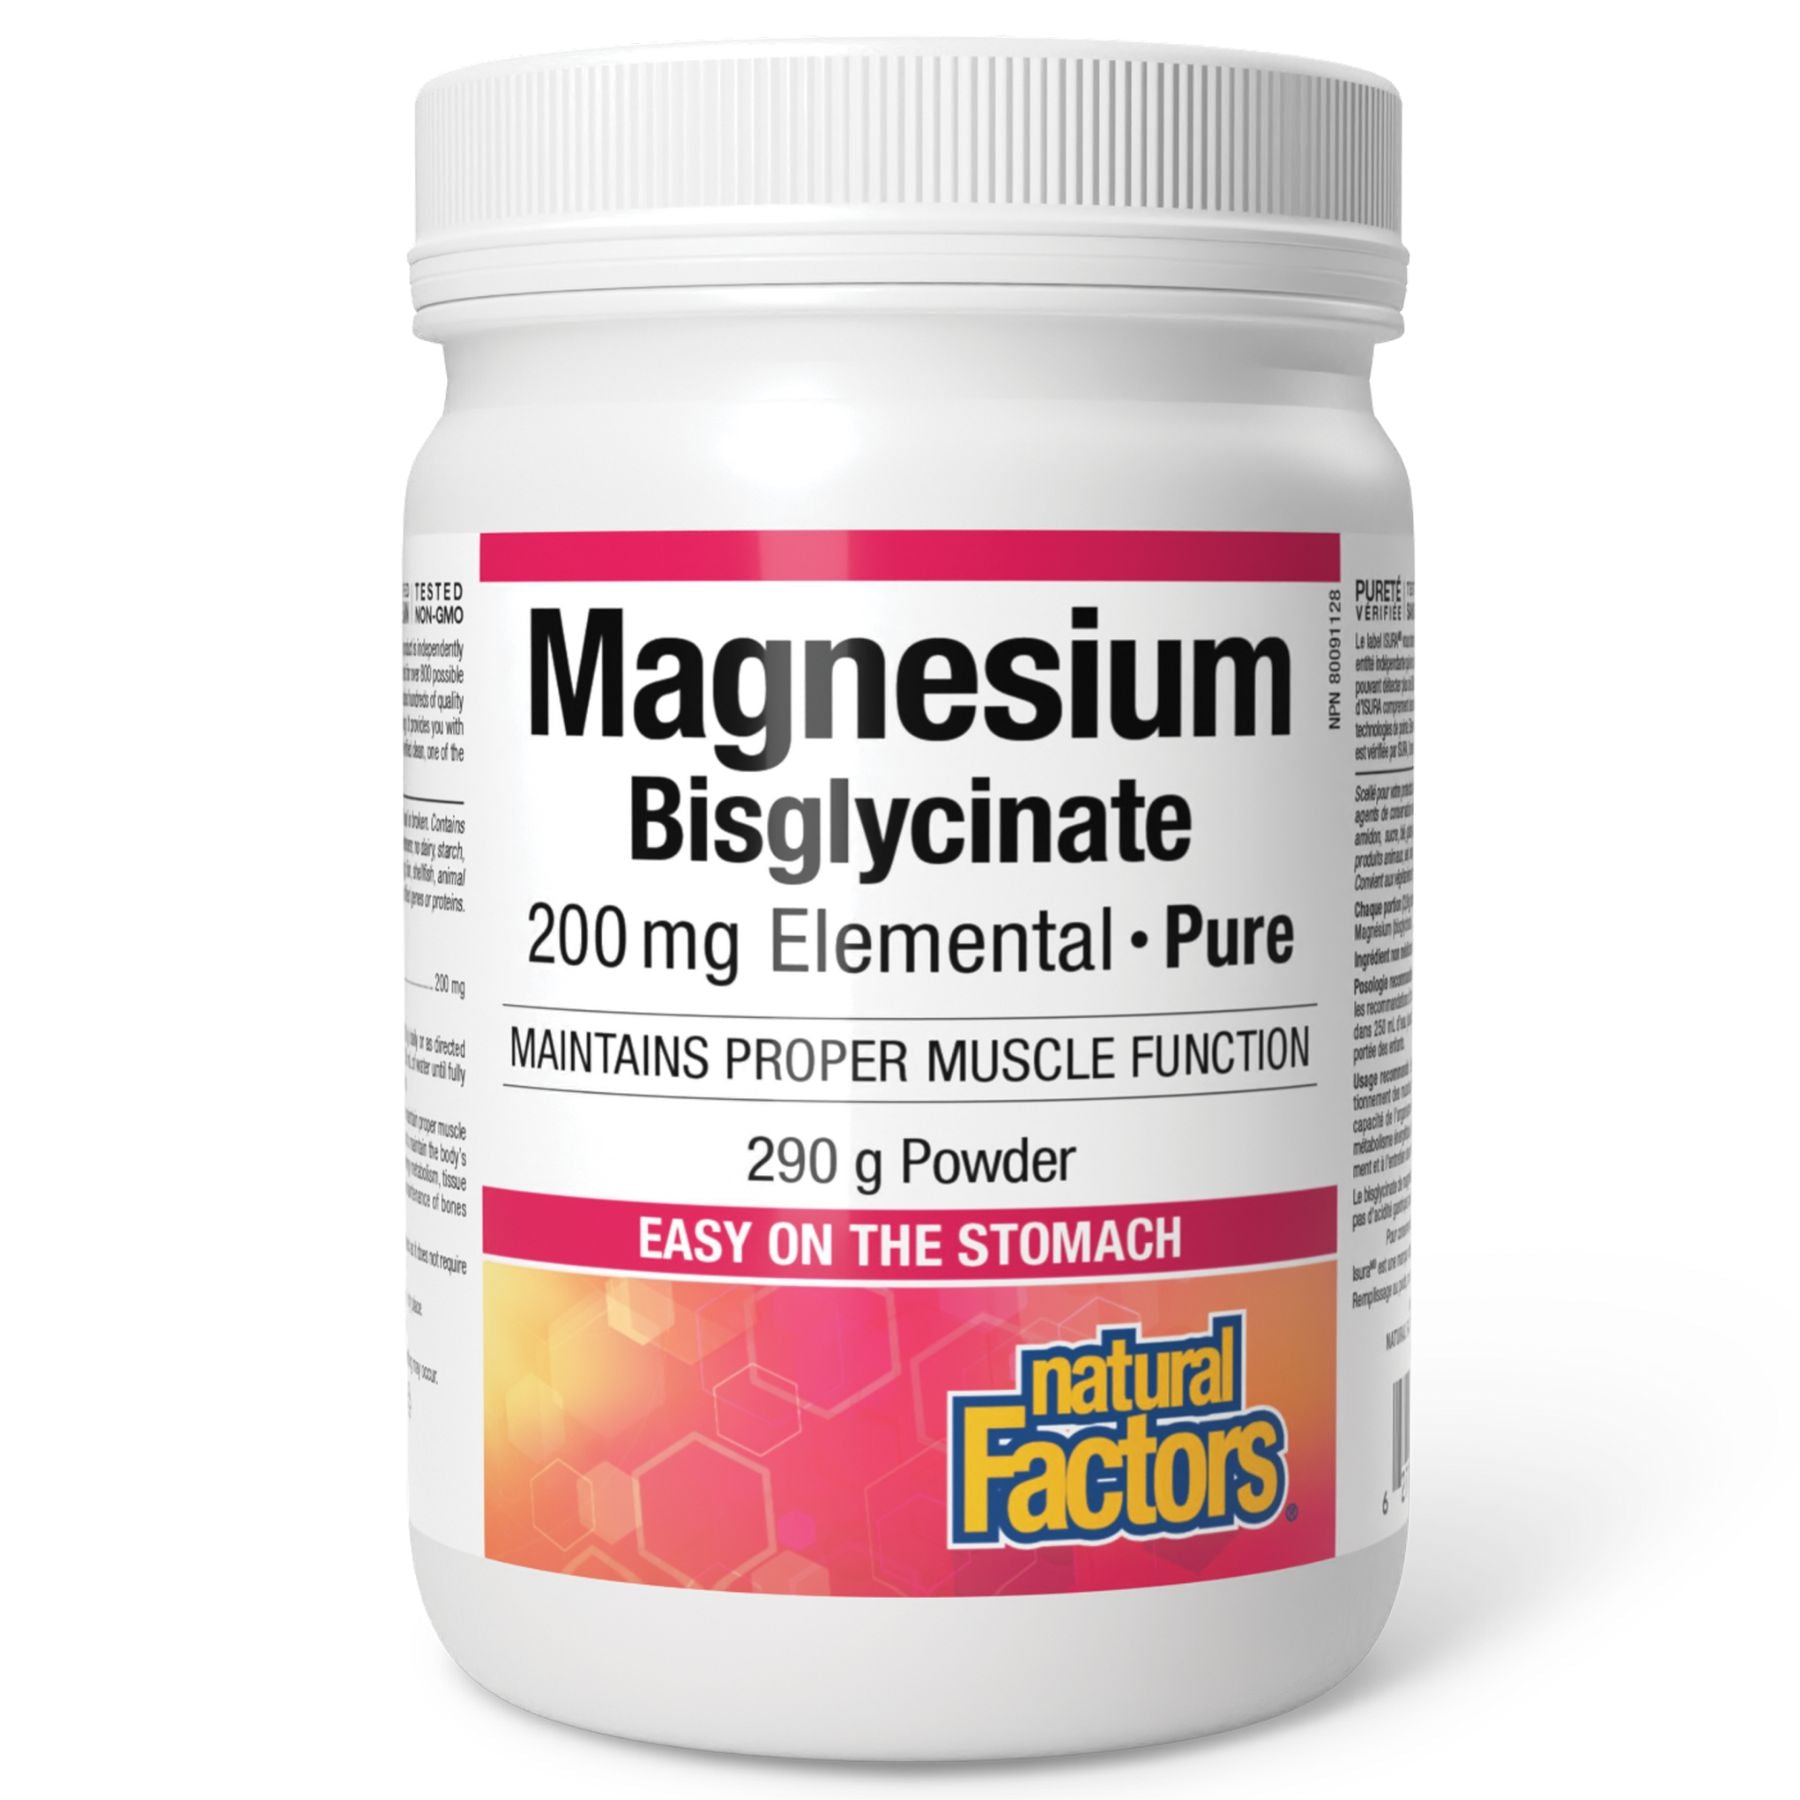 Natural Factors Magnesium Bisglycinate Pure 200mg 290g